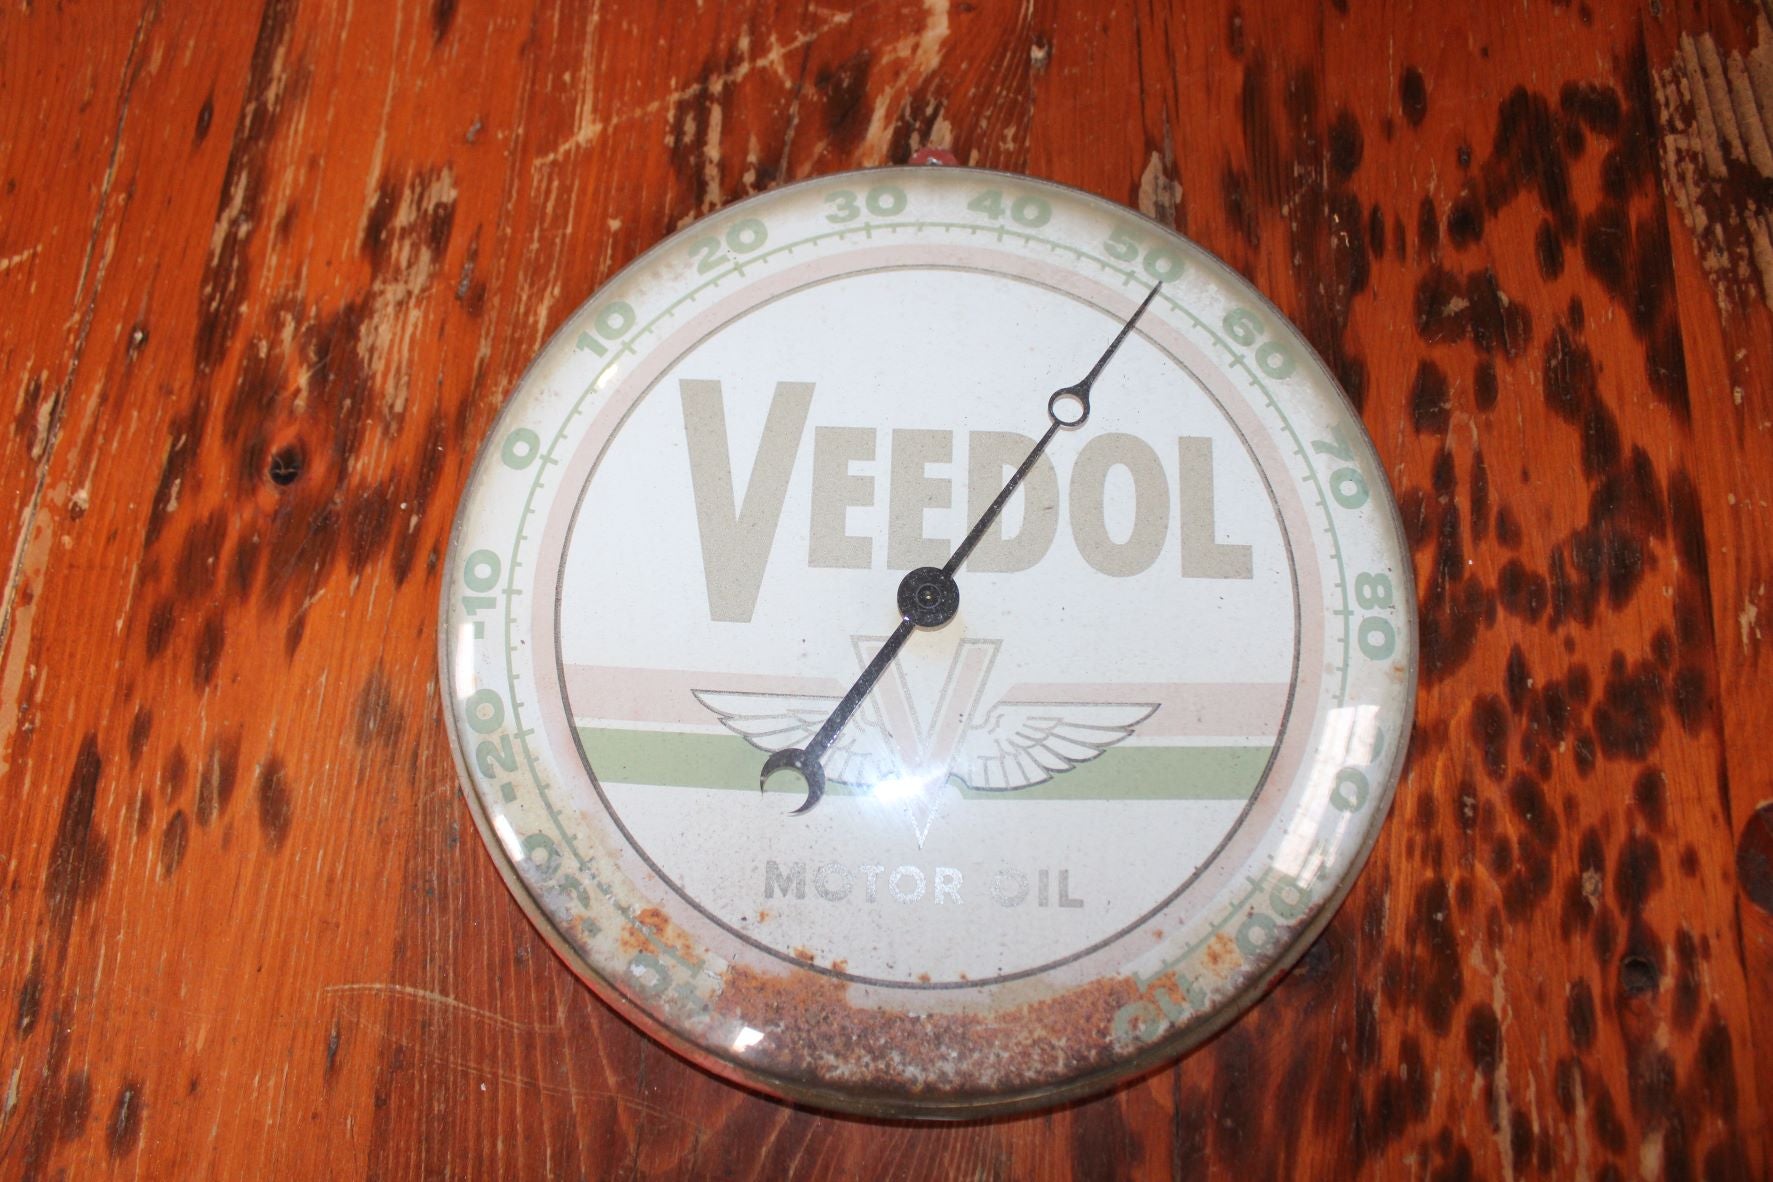 Vintage Veedol Motor Oil Thermometer